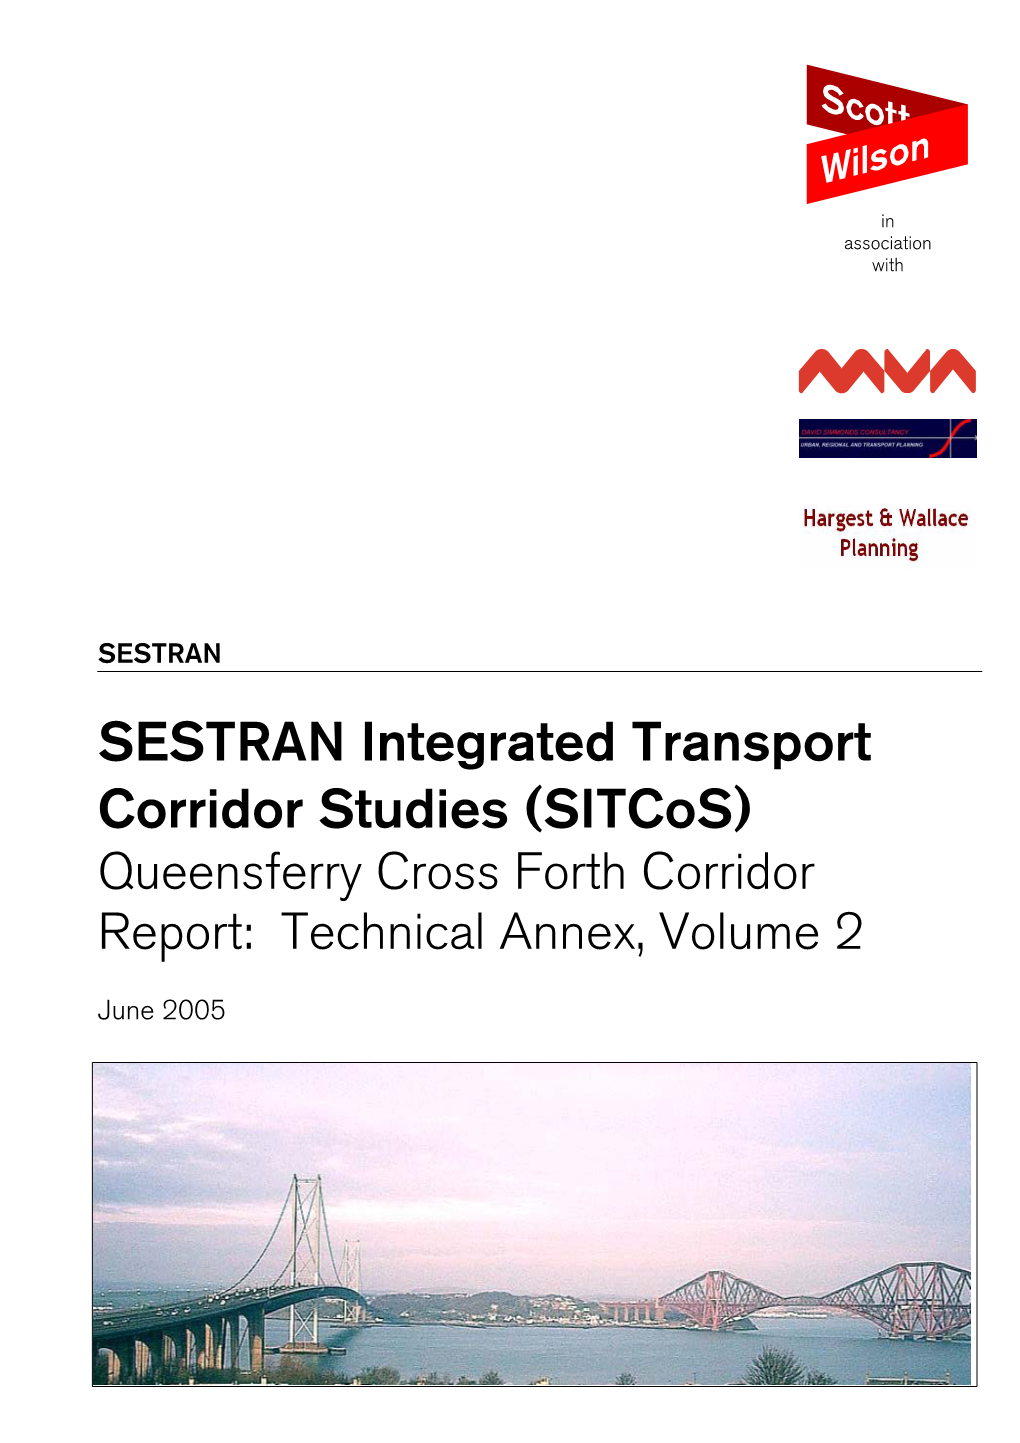 SESTRAN Integrated Transport Corridor Studies (Sitcos) Queensferry Cross Forth Corridor Report: Technical Annex, Volume 2